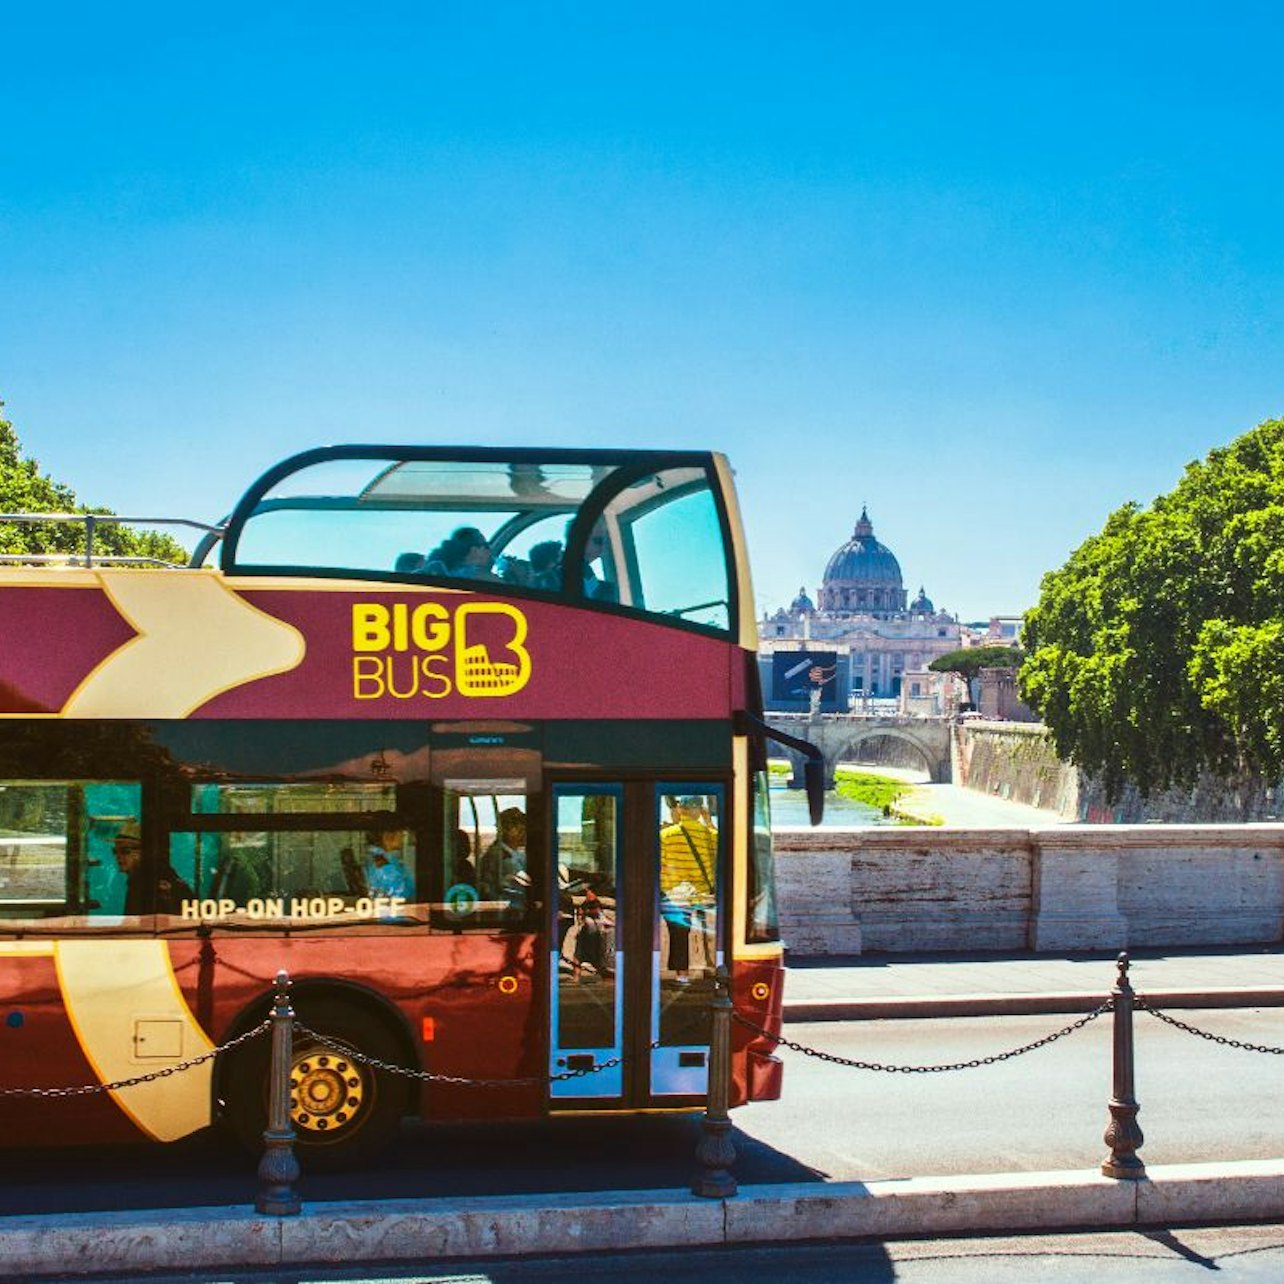 Big Bus Roma - Tour Hop-on Hop-off - Alloggi in Roma